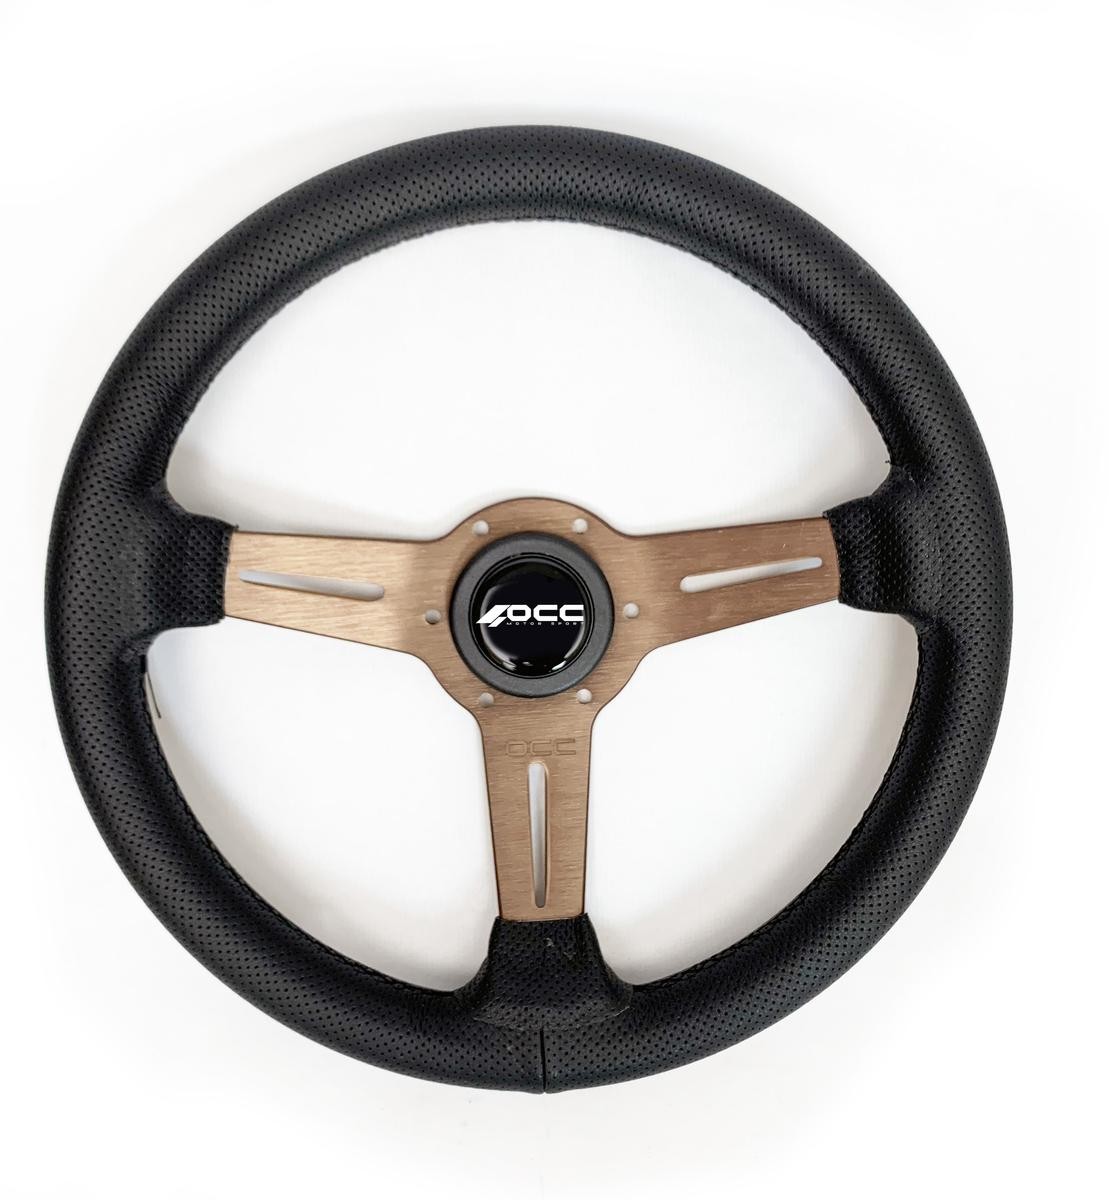 Subaru Sports steering wheel Occ Motorsport OCCVOL009 at a good price